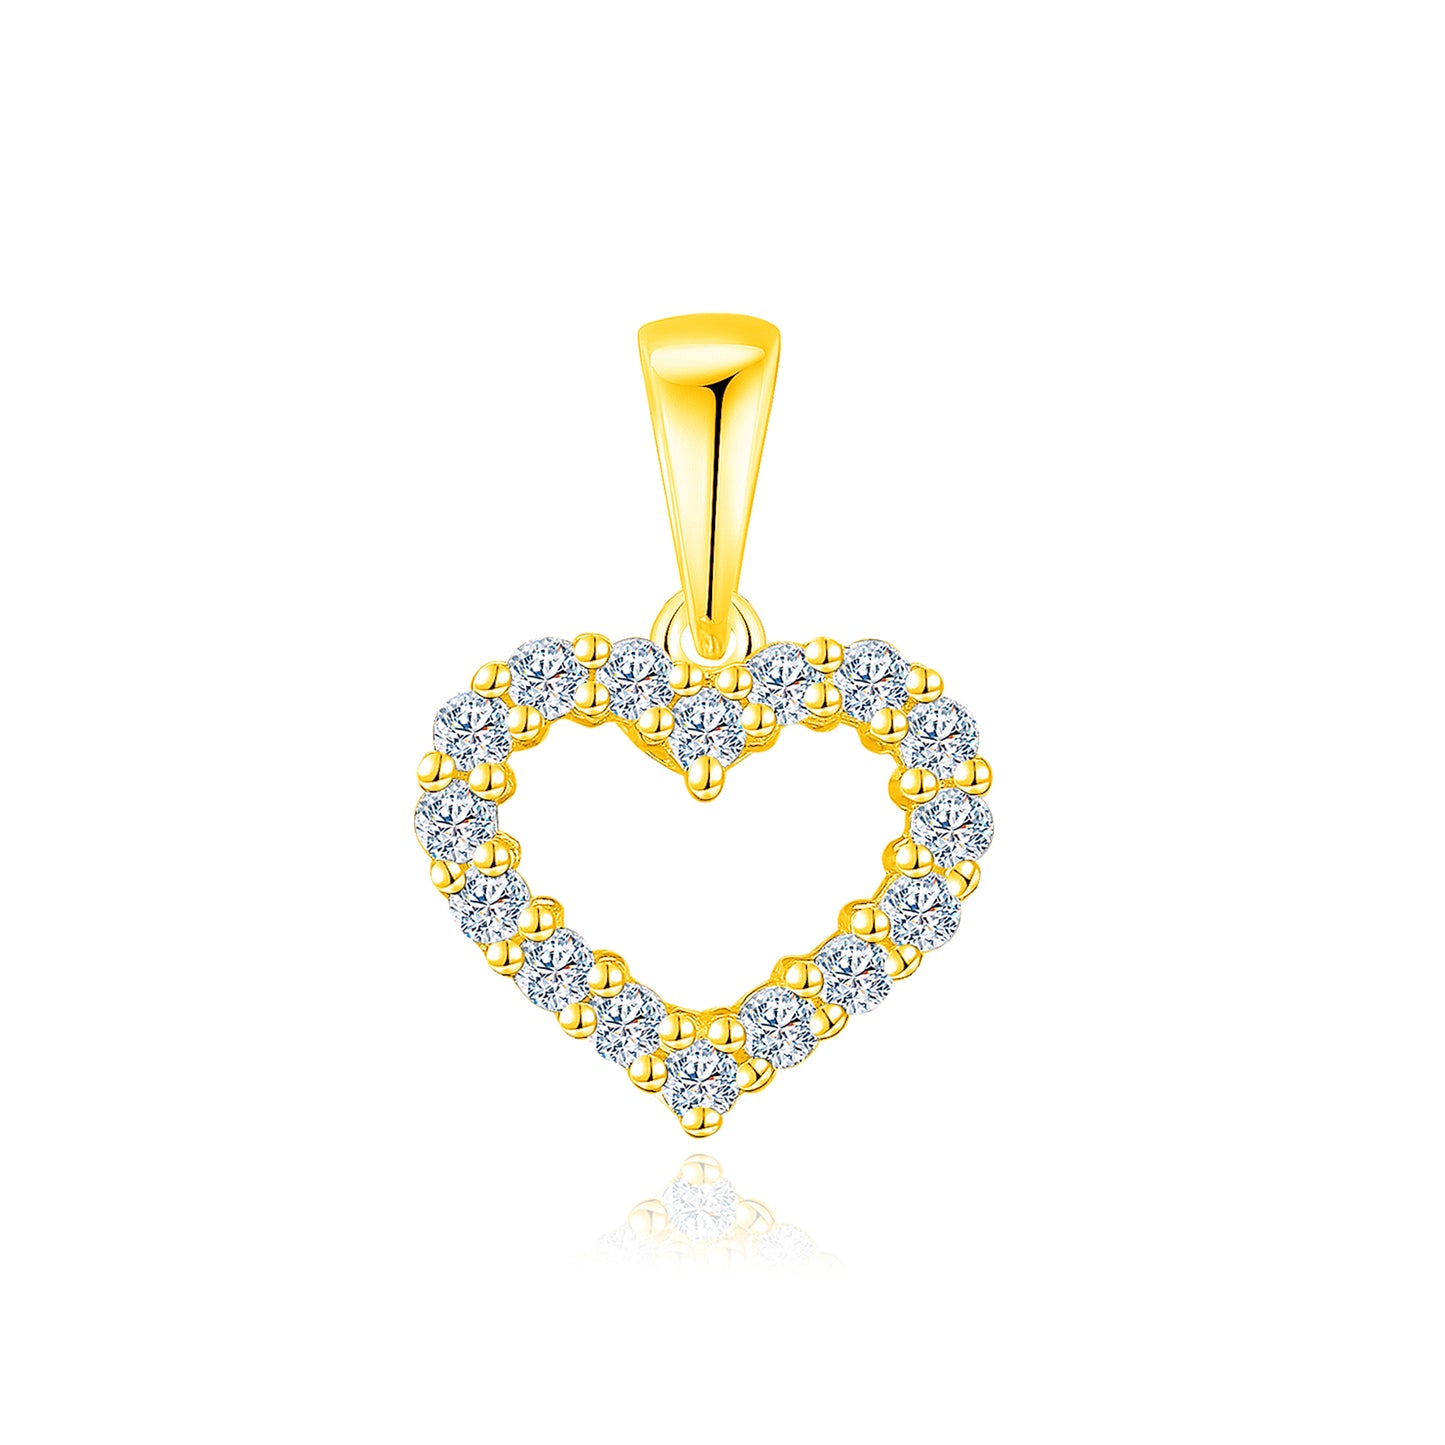 TAKA Jewellery Emotion Heart Diamond Pendant 18K